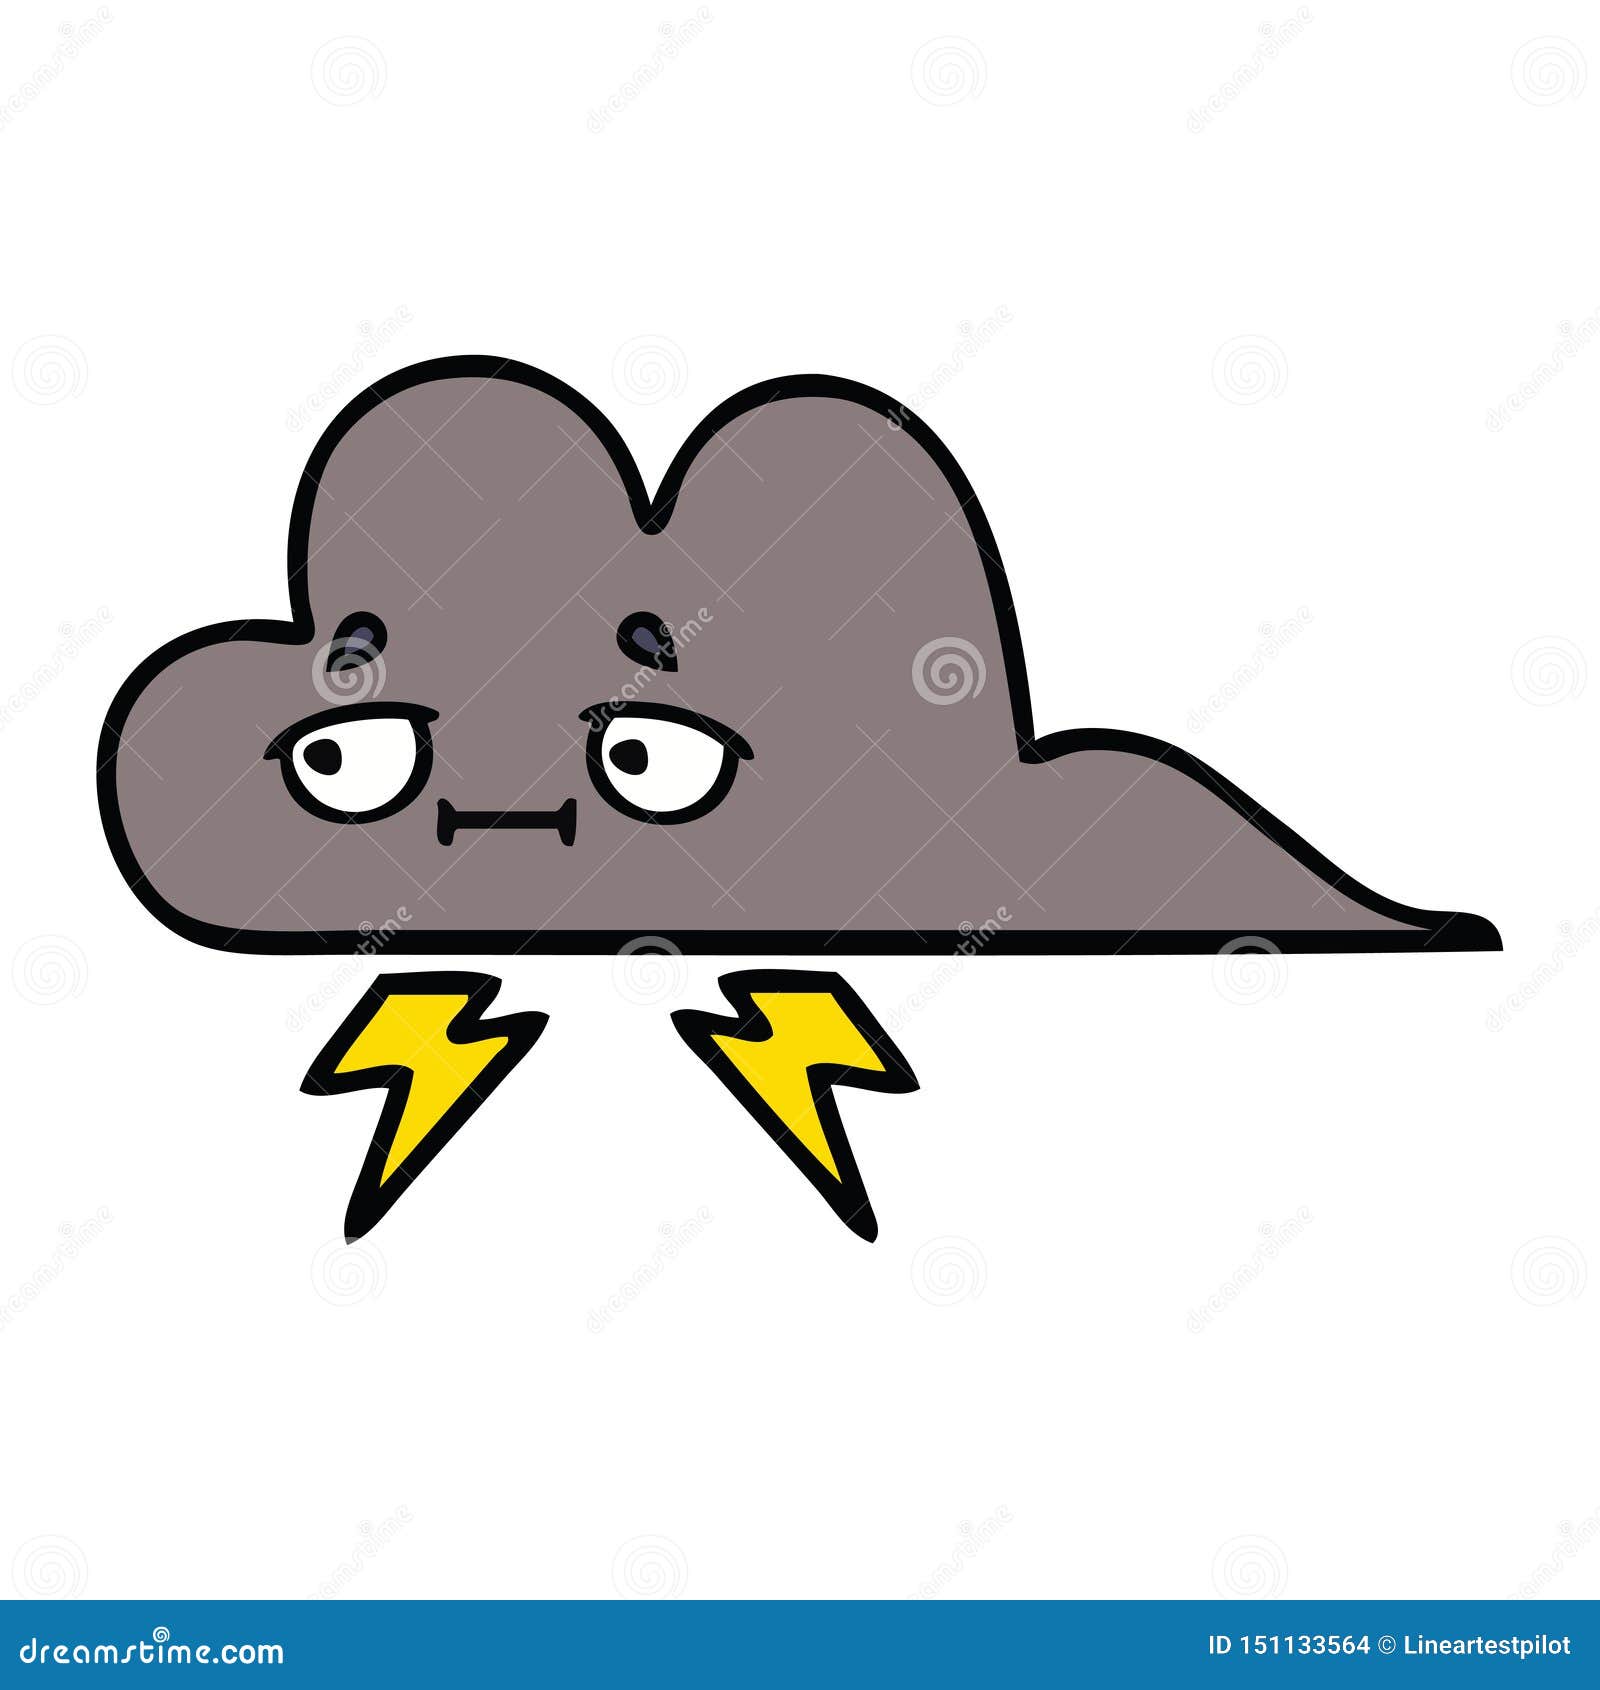 A Creative Cute Cartoon Storm Cloud Stock Vector - Illustration of ...